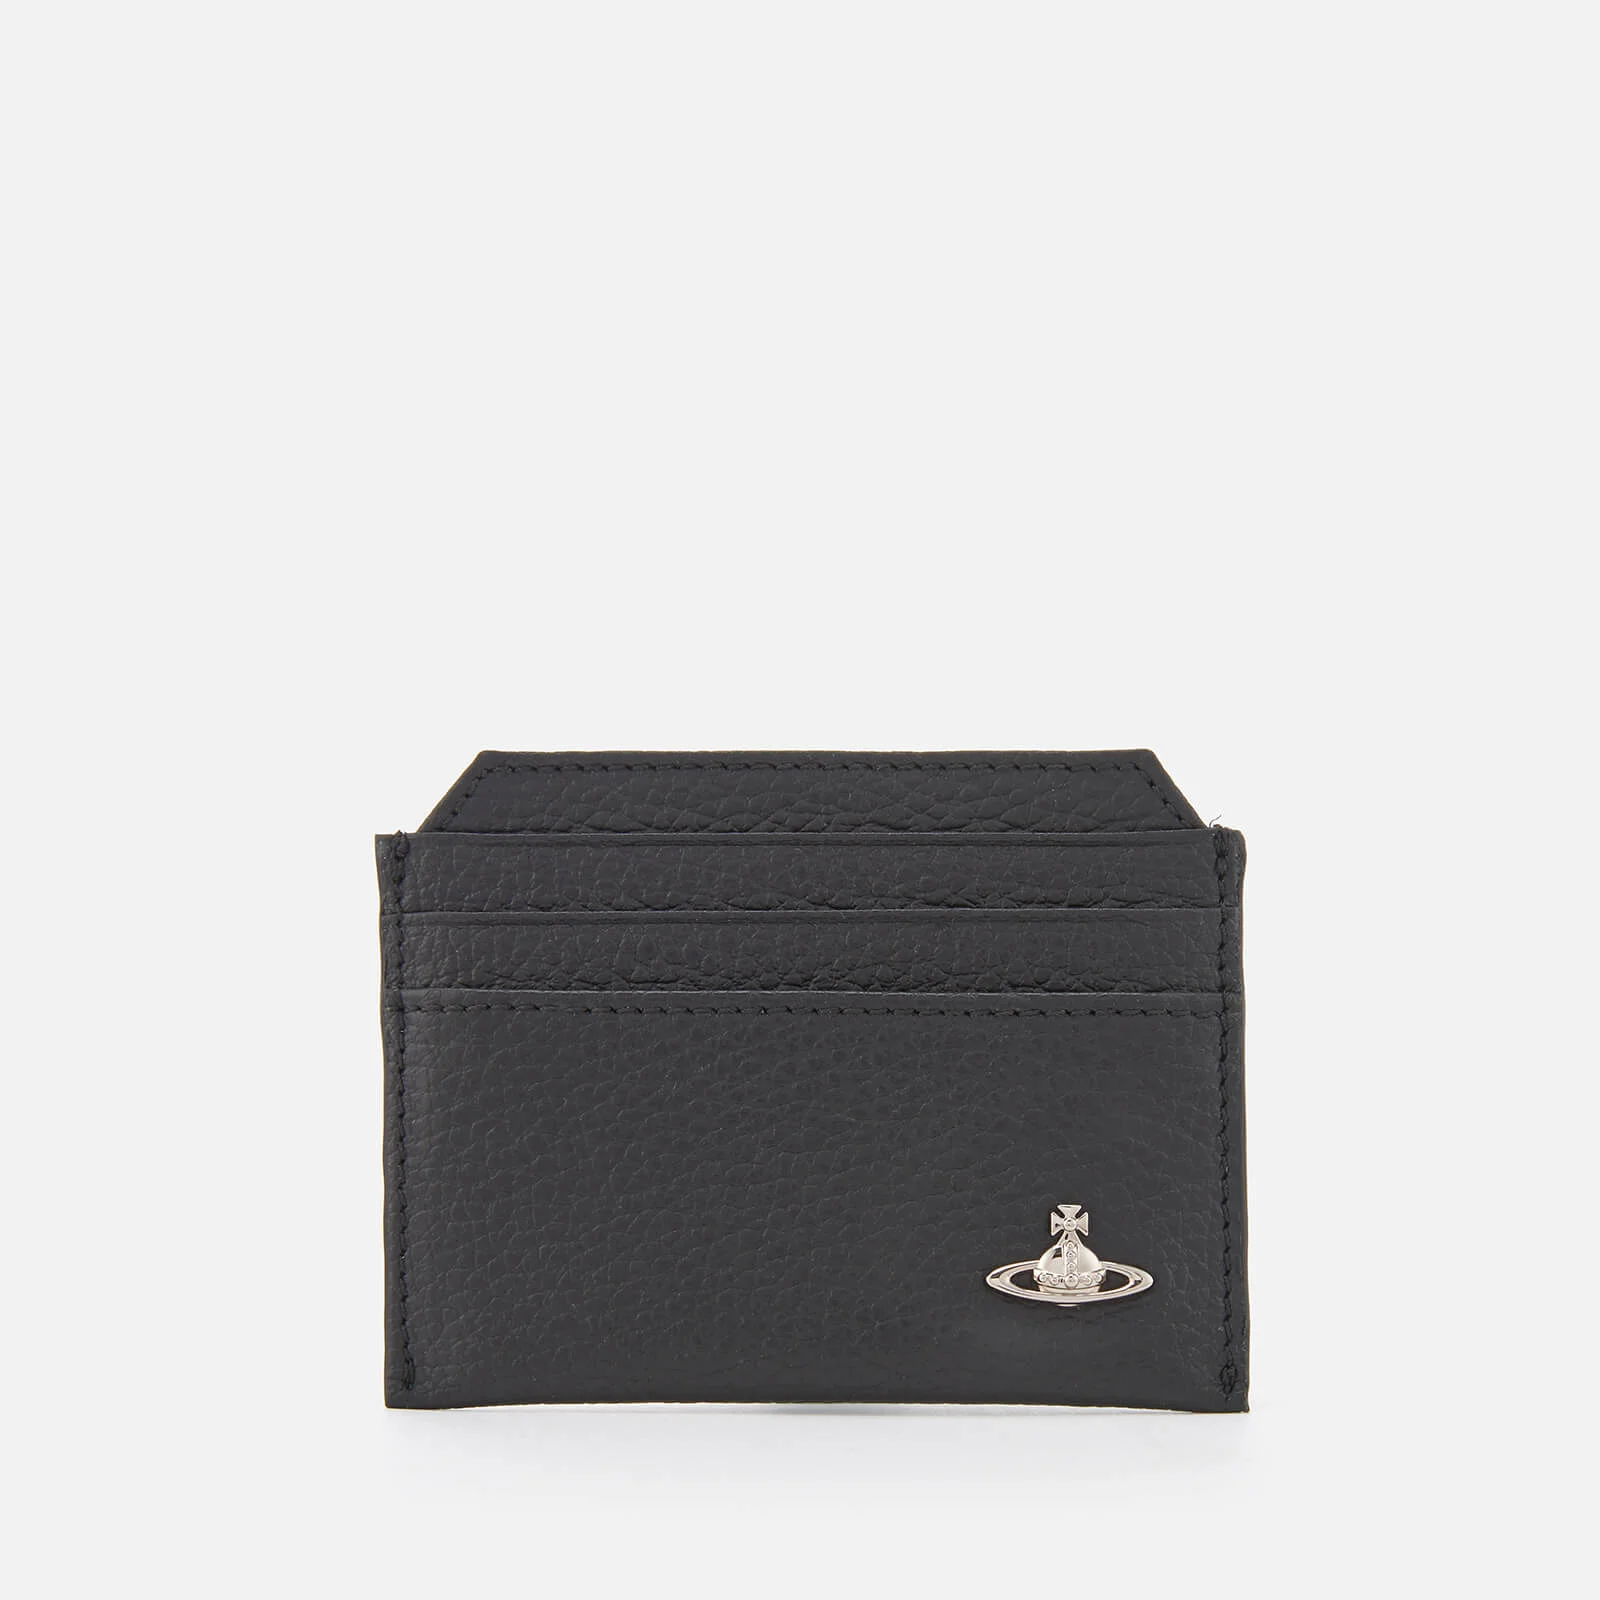 Vivienne Westwood Men's Milano Small Card Holder - Black Image 1